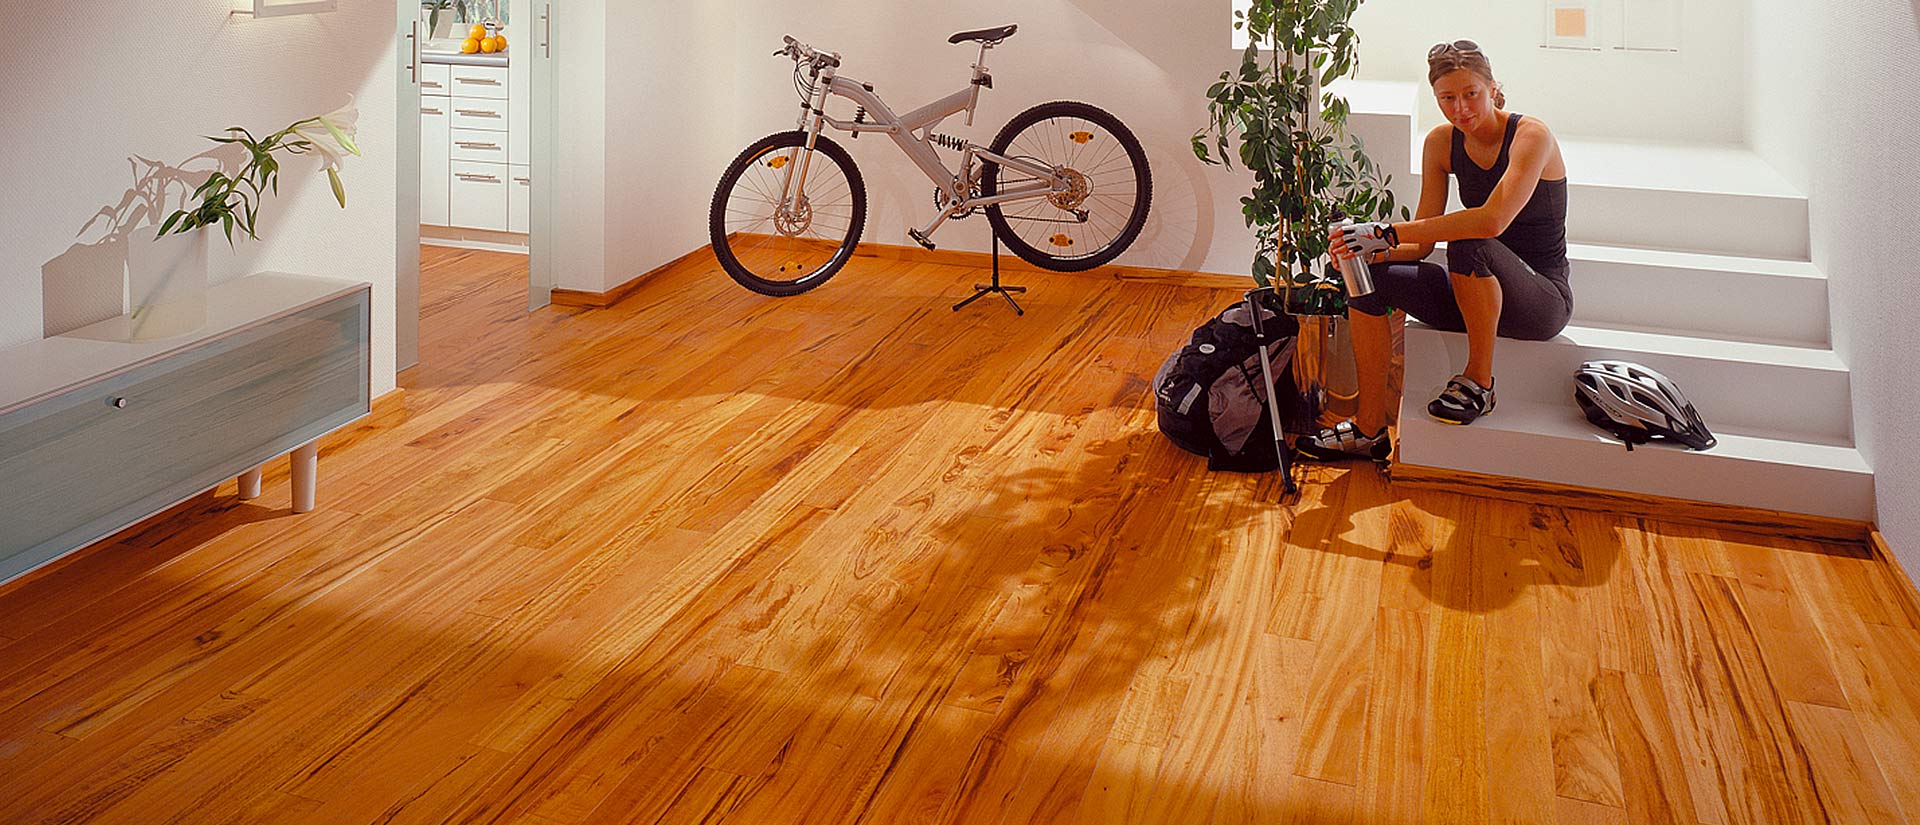 Jatoba flooring finished with Osmo Wood Wax Finish Clear Extra Thin 1101